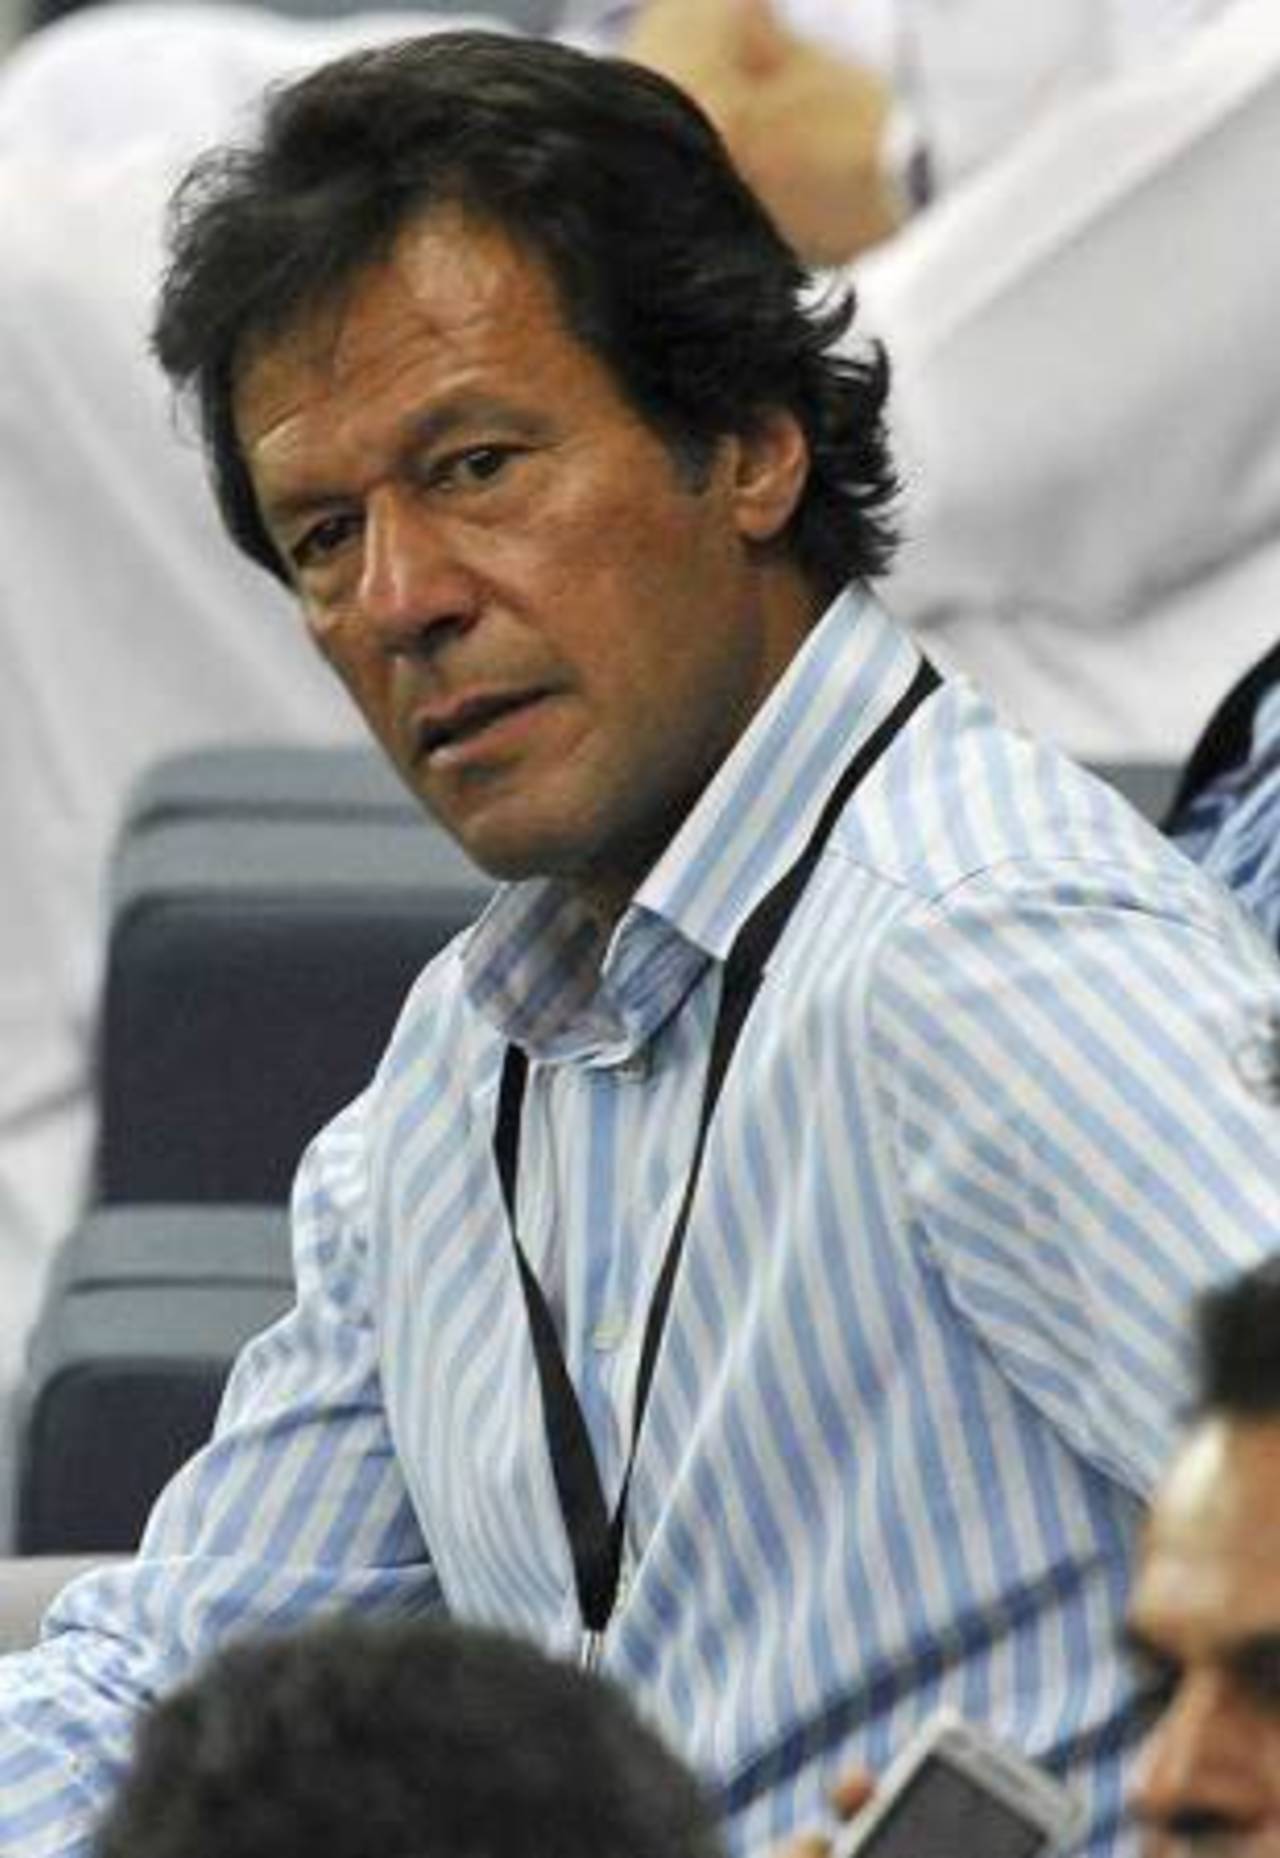 Imran Khan and leather, a deadly combination - just saying&nbsp;&nbsp;&bull;&nbsp;&nbsp;Associated Press